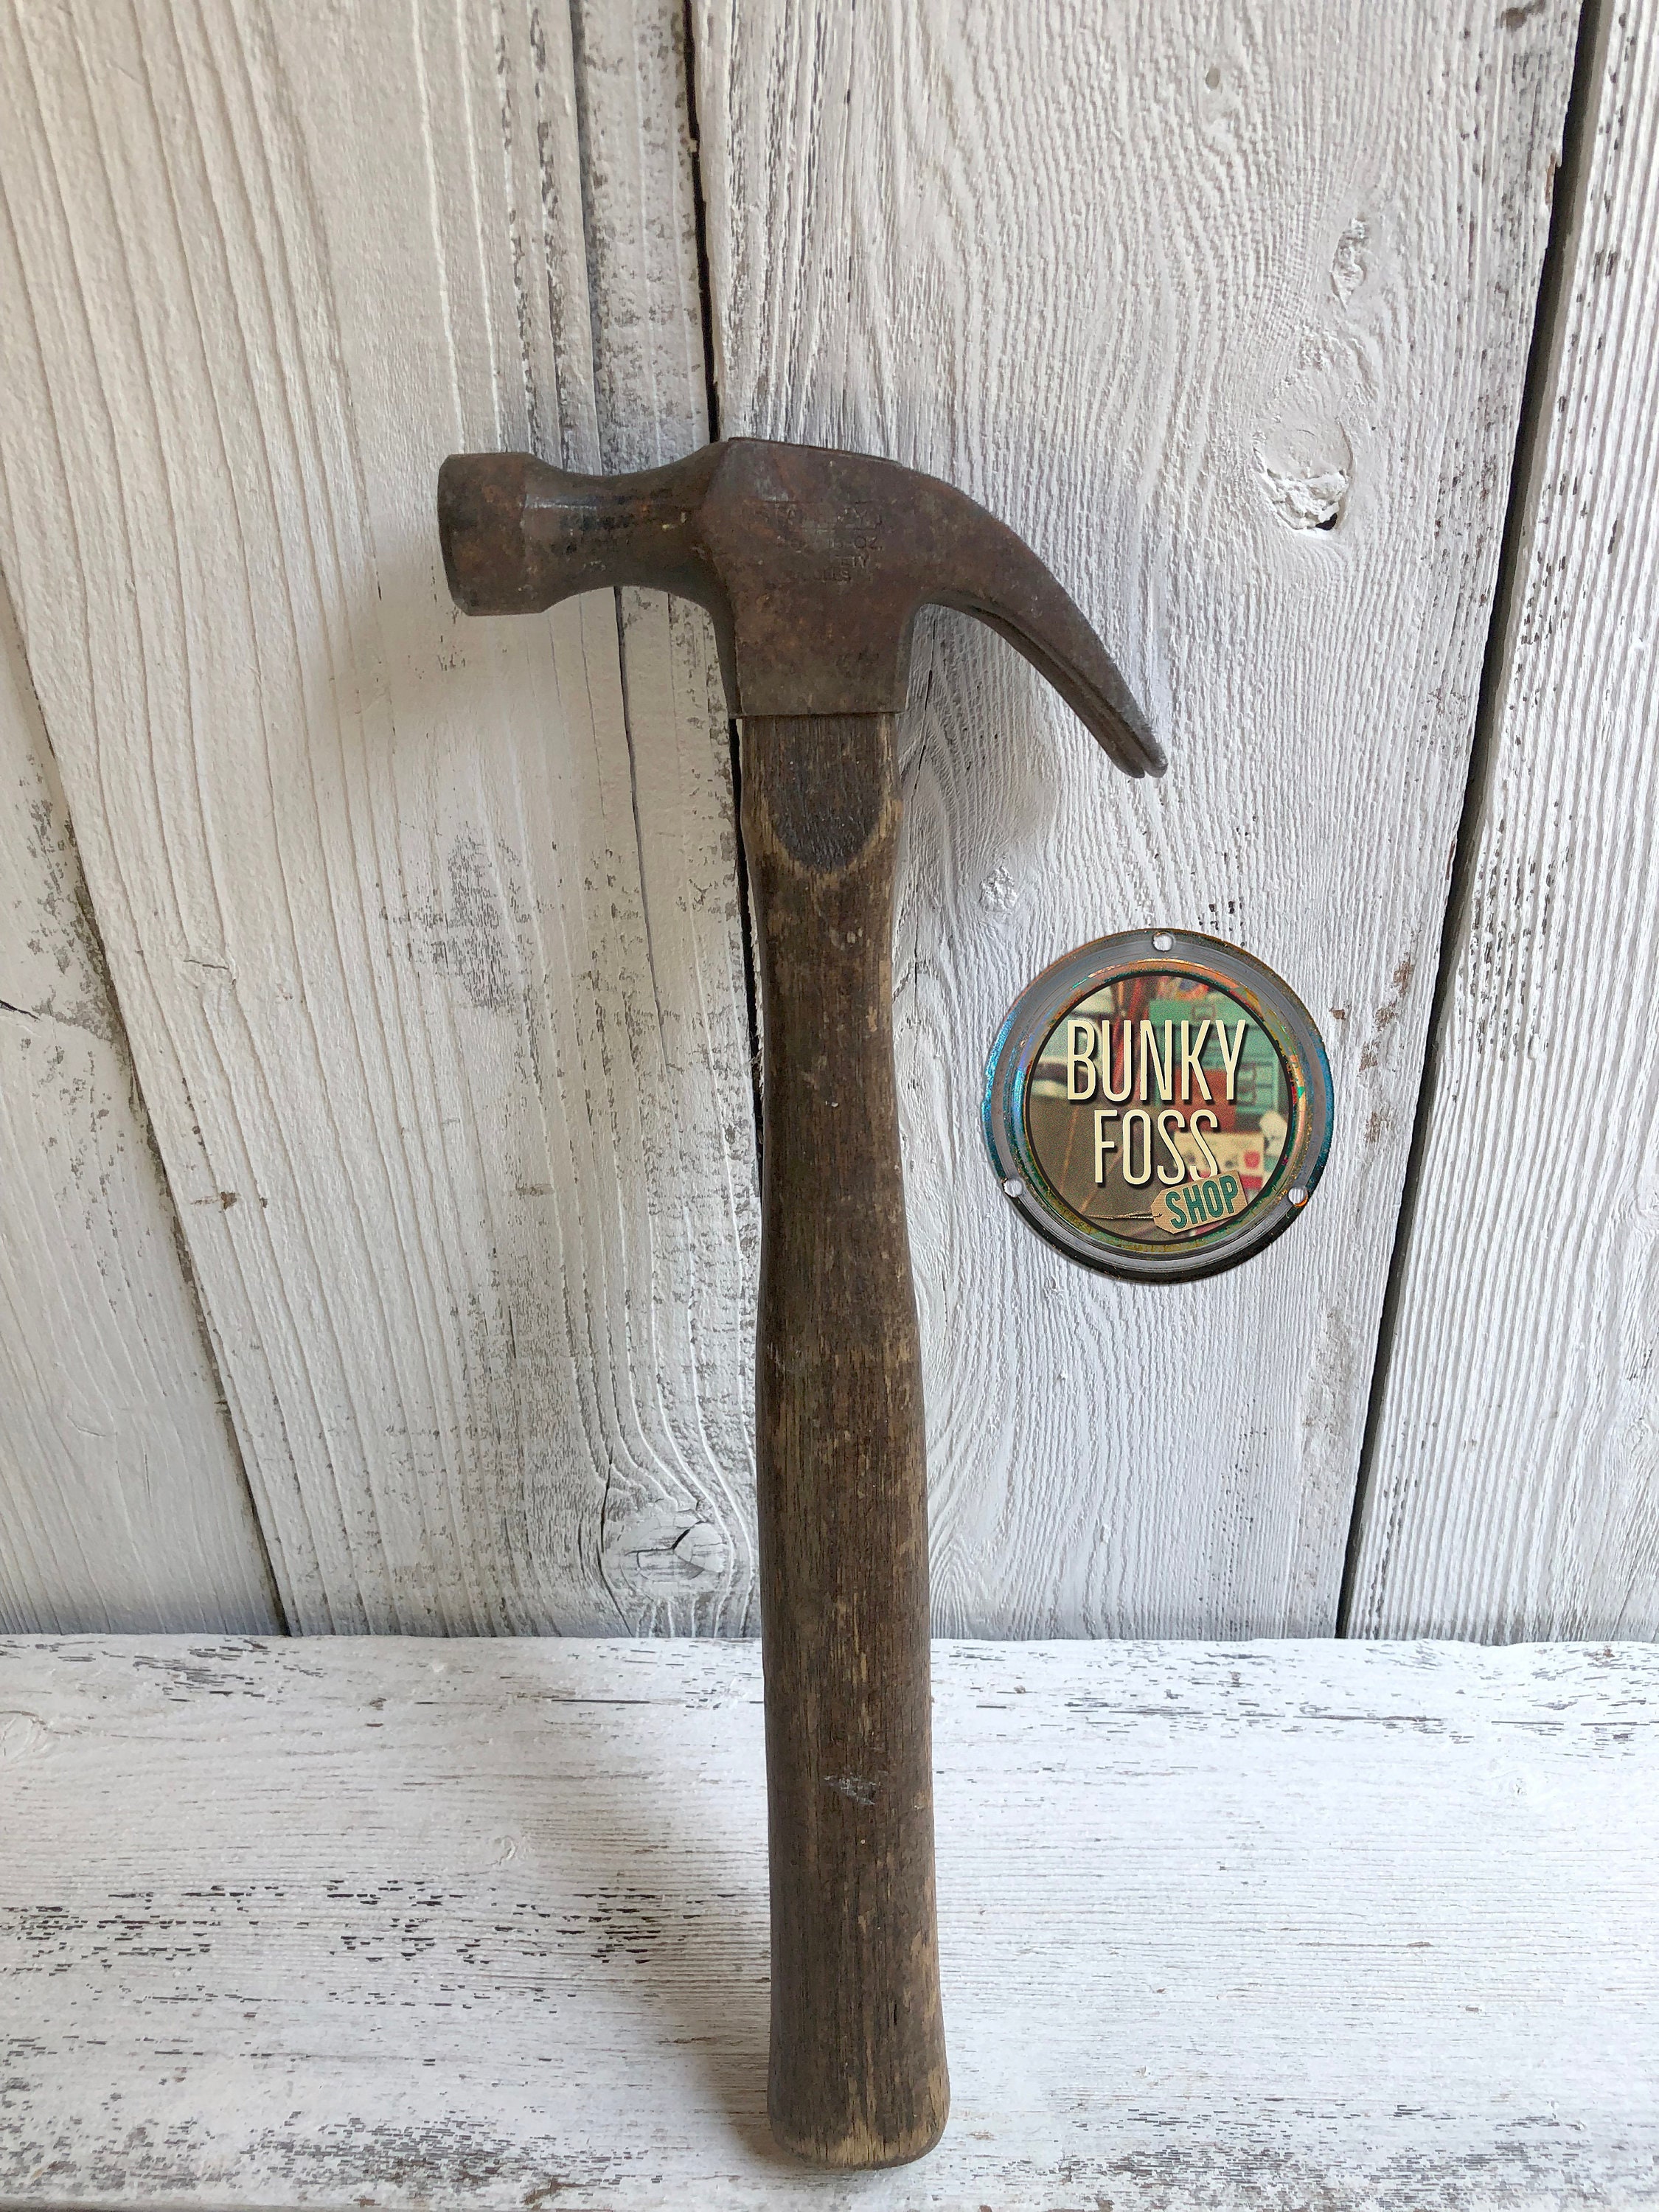 Vintage Stanley Wooden Handled Claw Hammer,16 Oz, Old Hammer